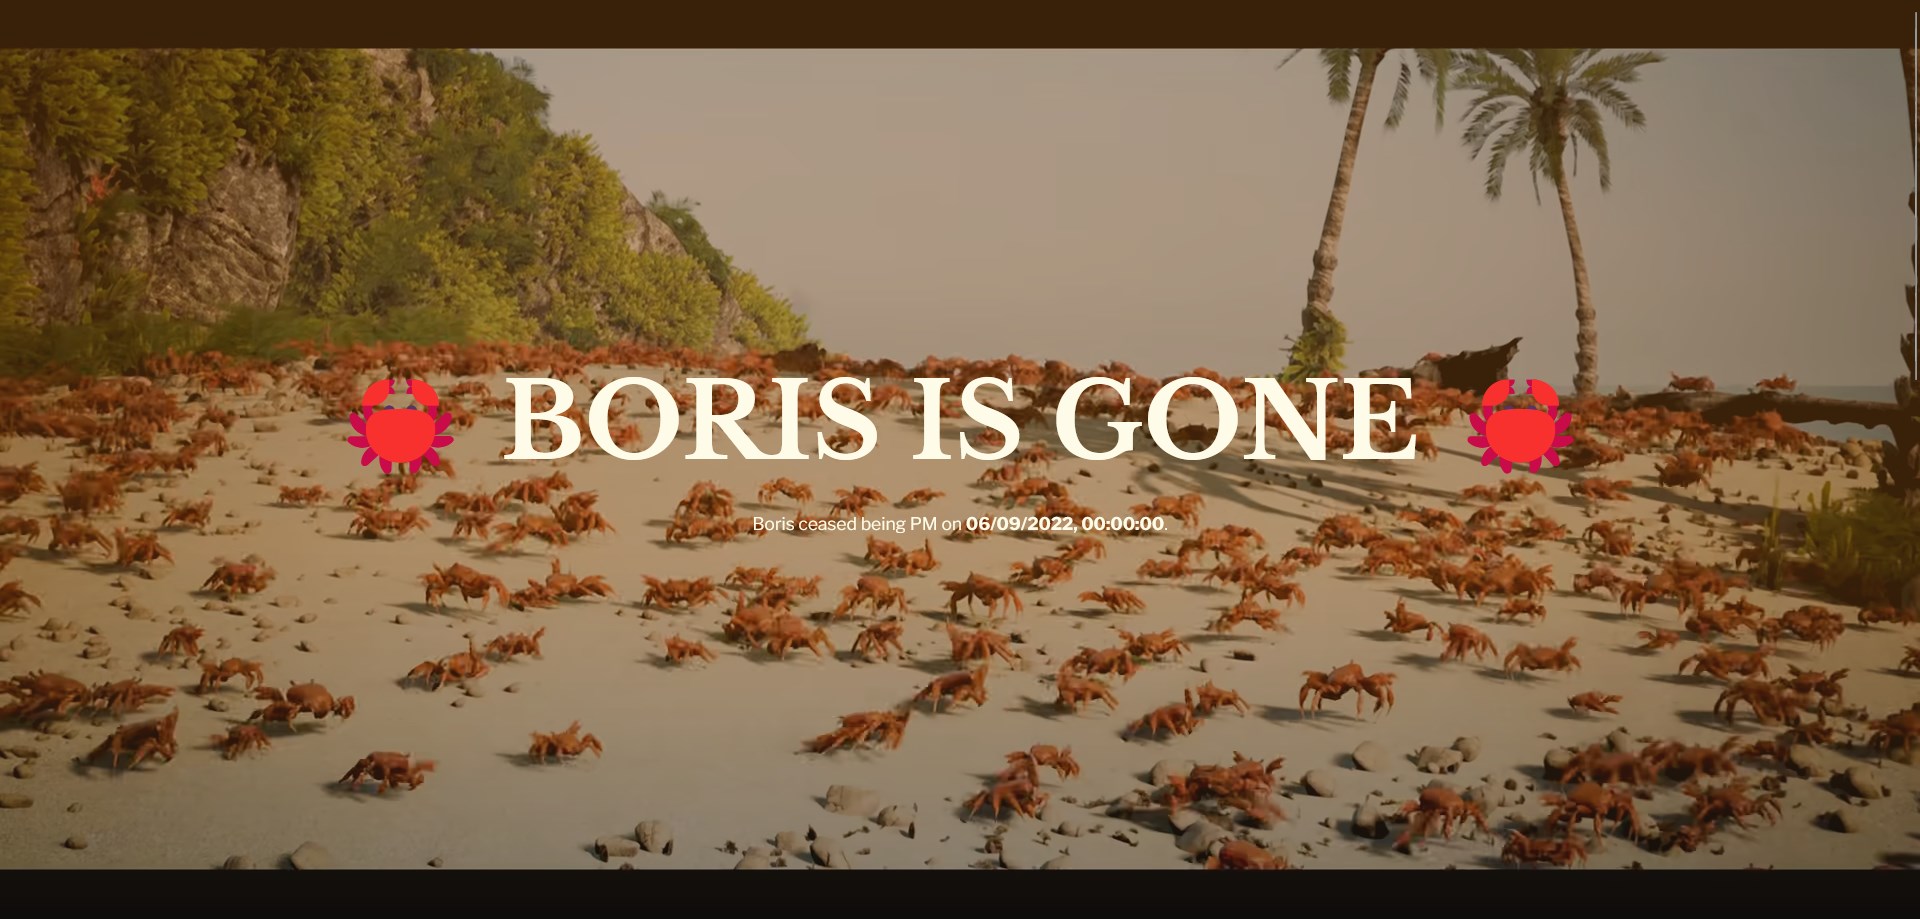 Is Boris Gone? website after he resigned.